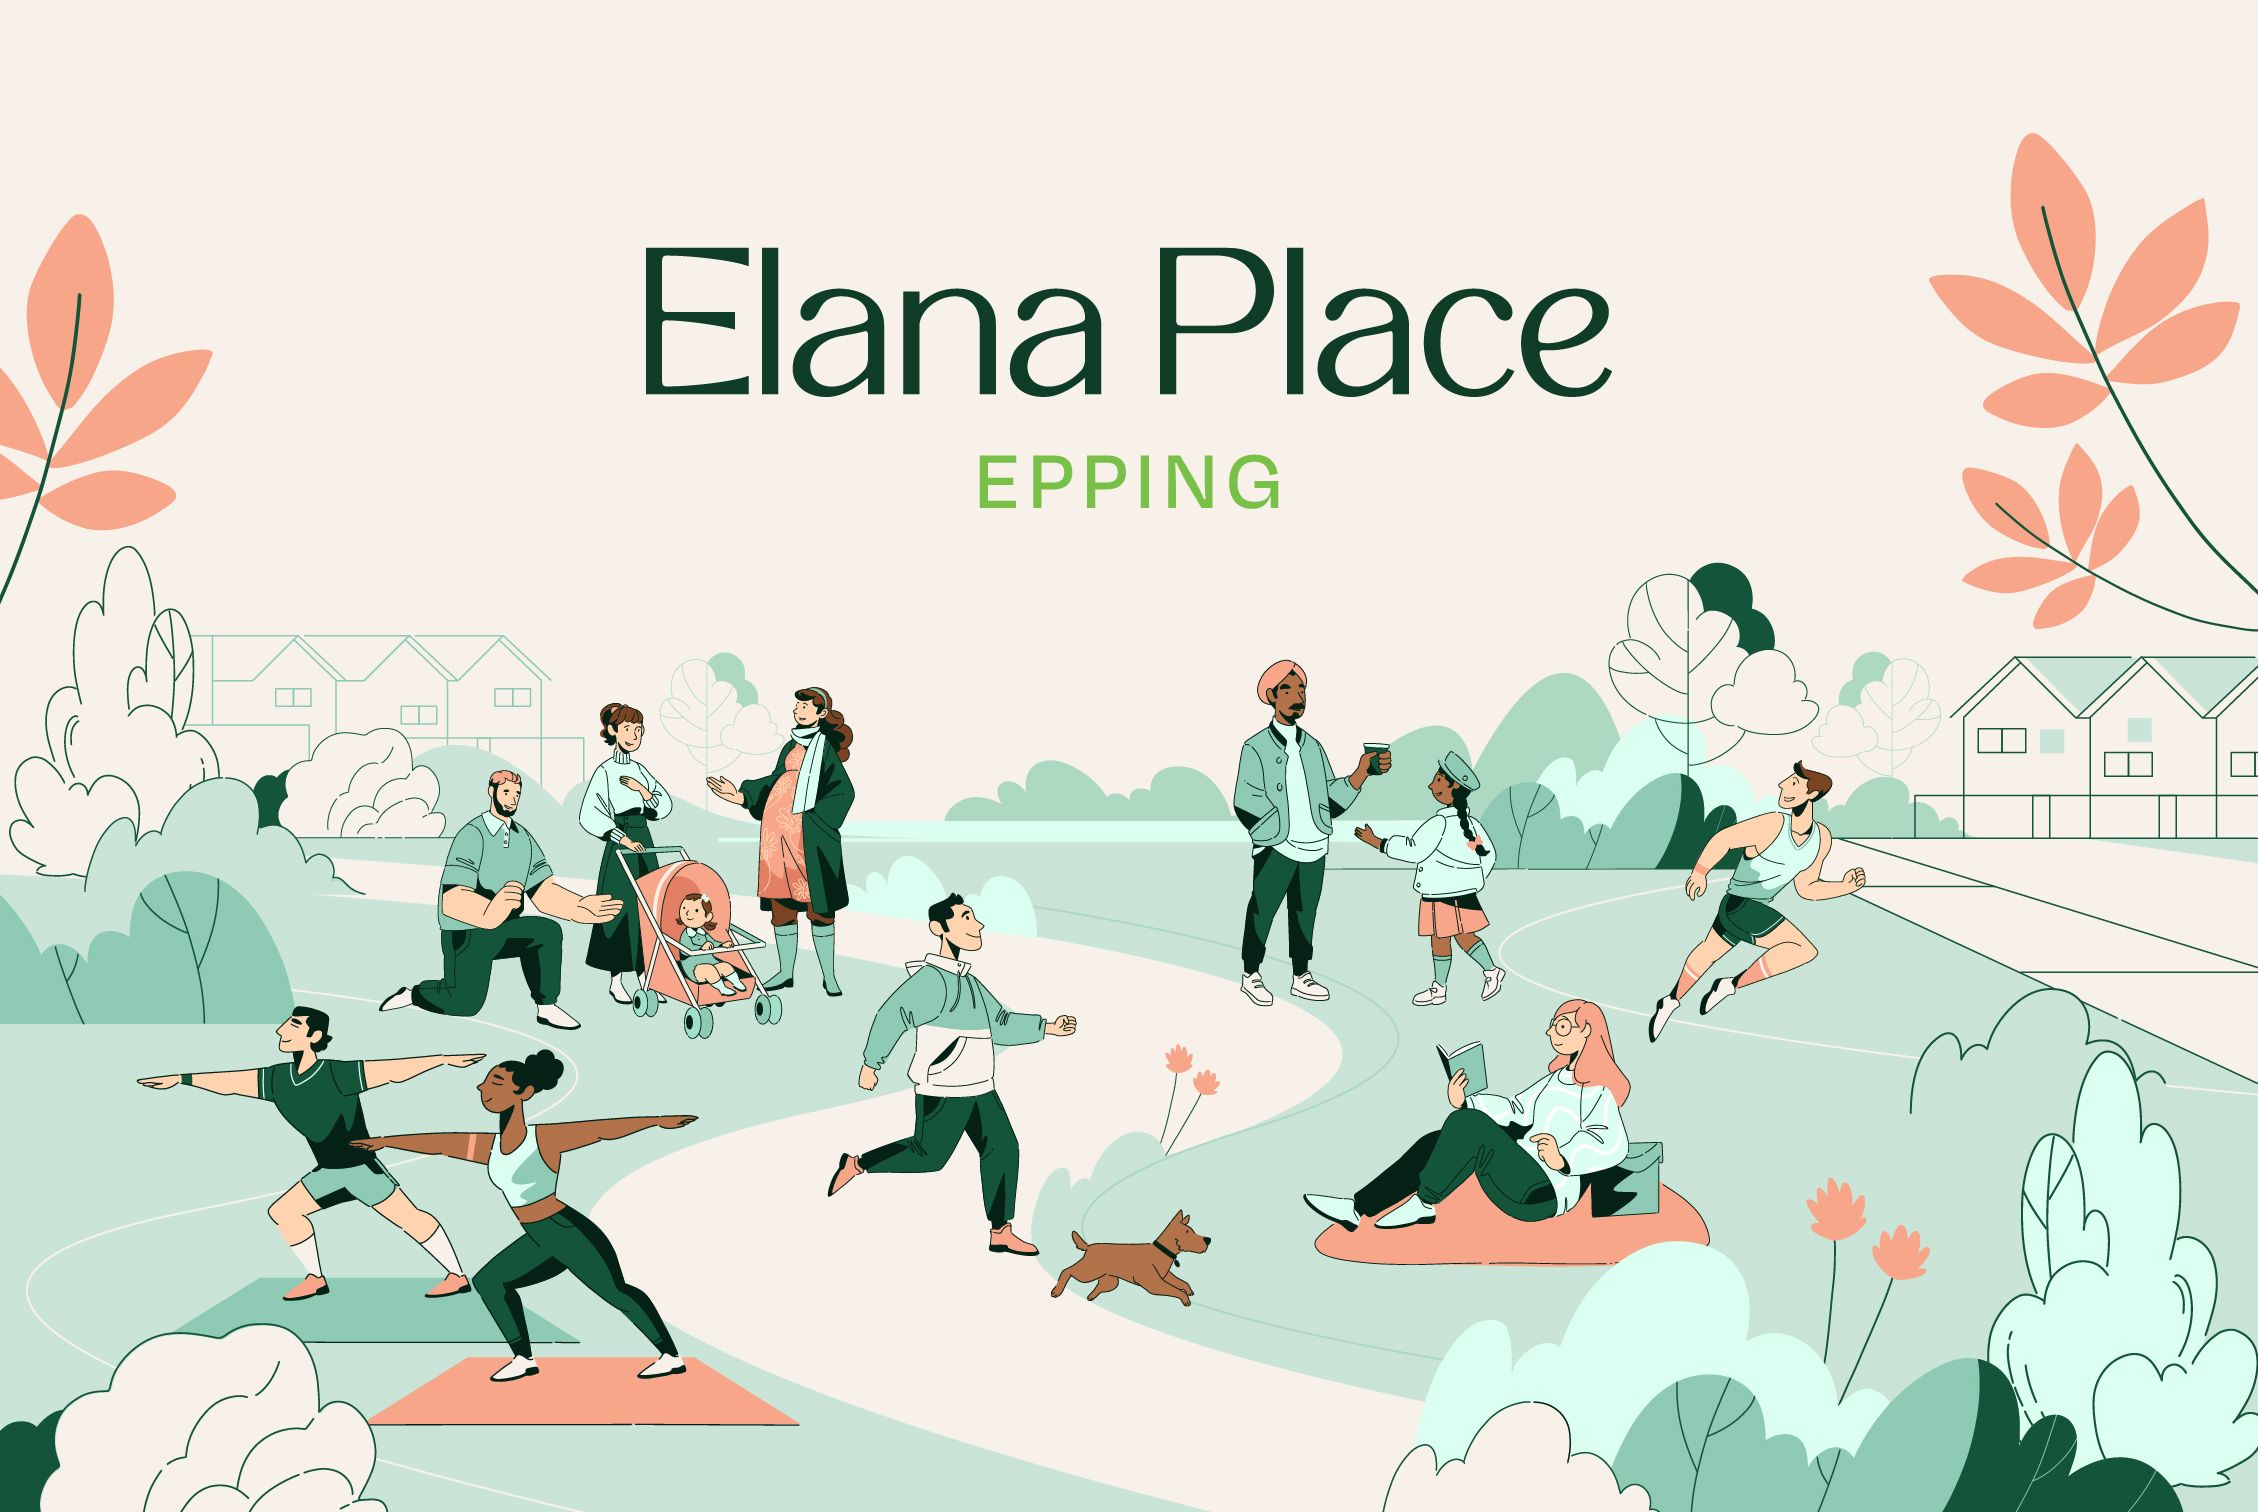 Elana Place